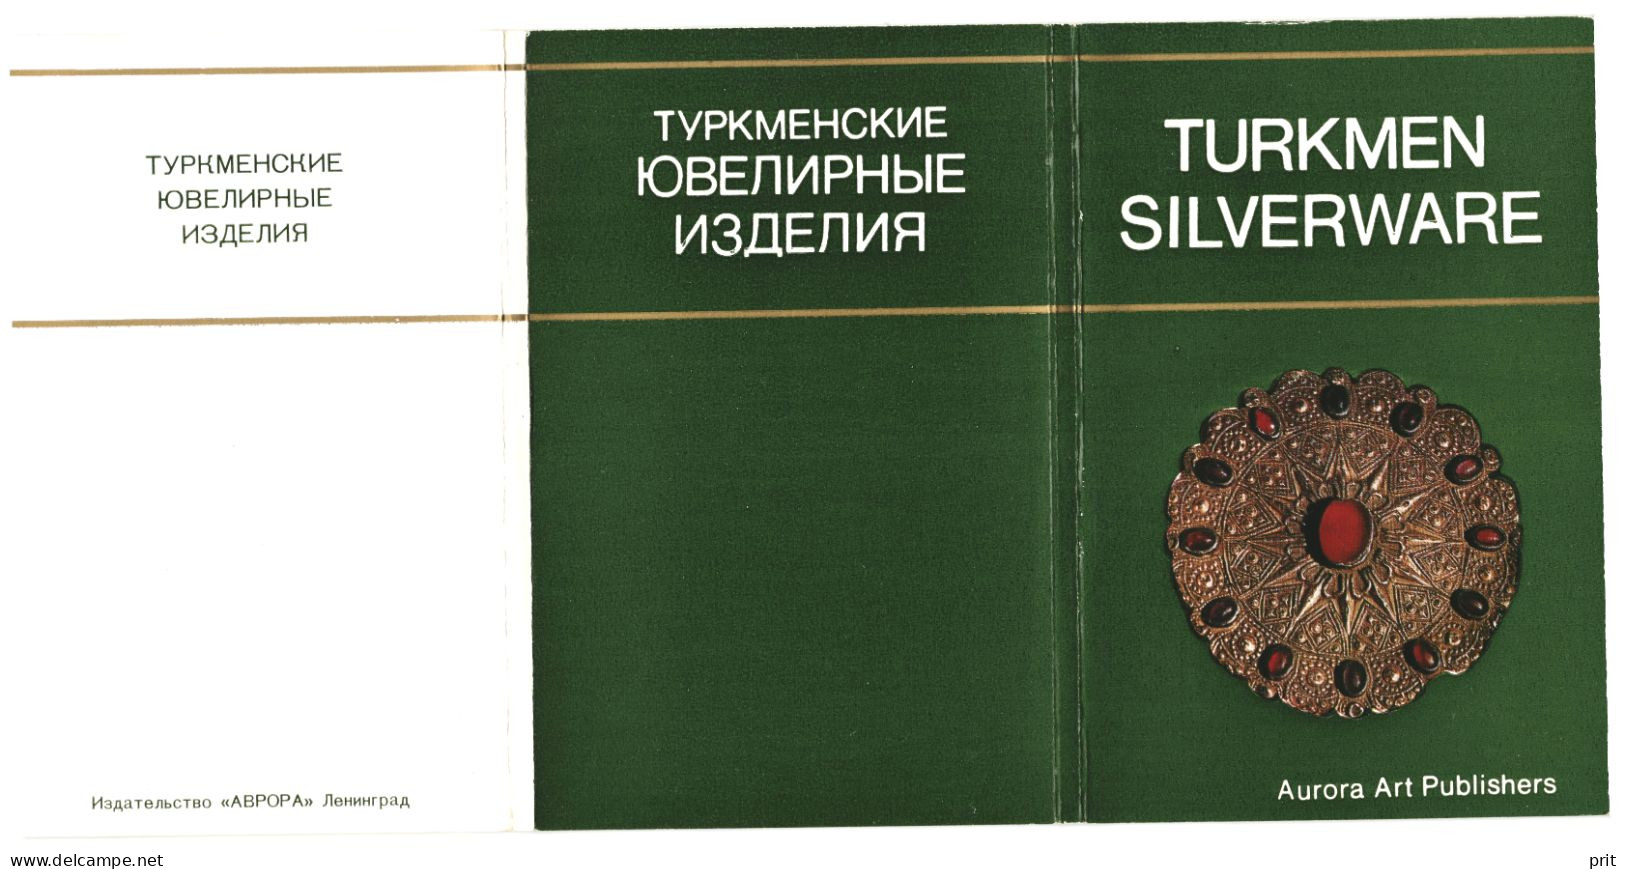 Turkmen Silverware Antique Jewelry Unused 16 Postcards Set, Soviet Turkmenistan USSR 1975 Publisher Aurora, Leningrad - Turkmenistán